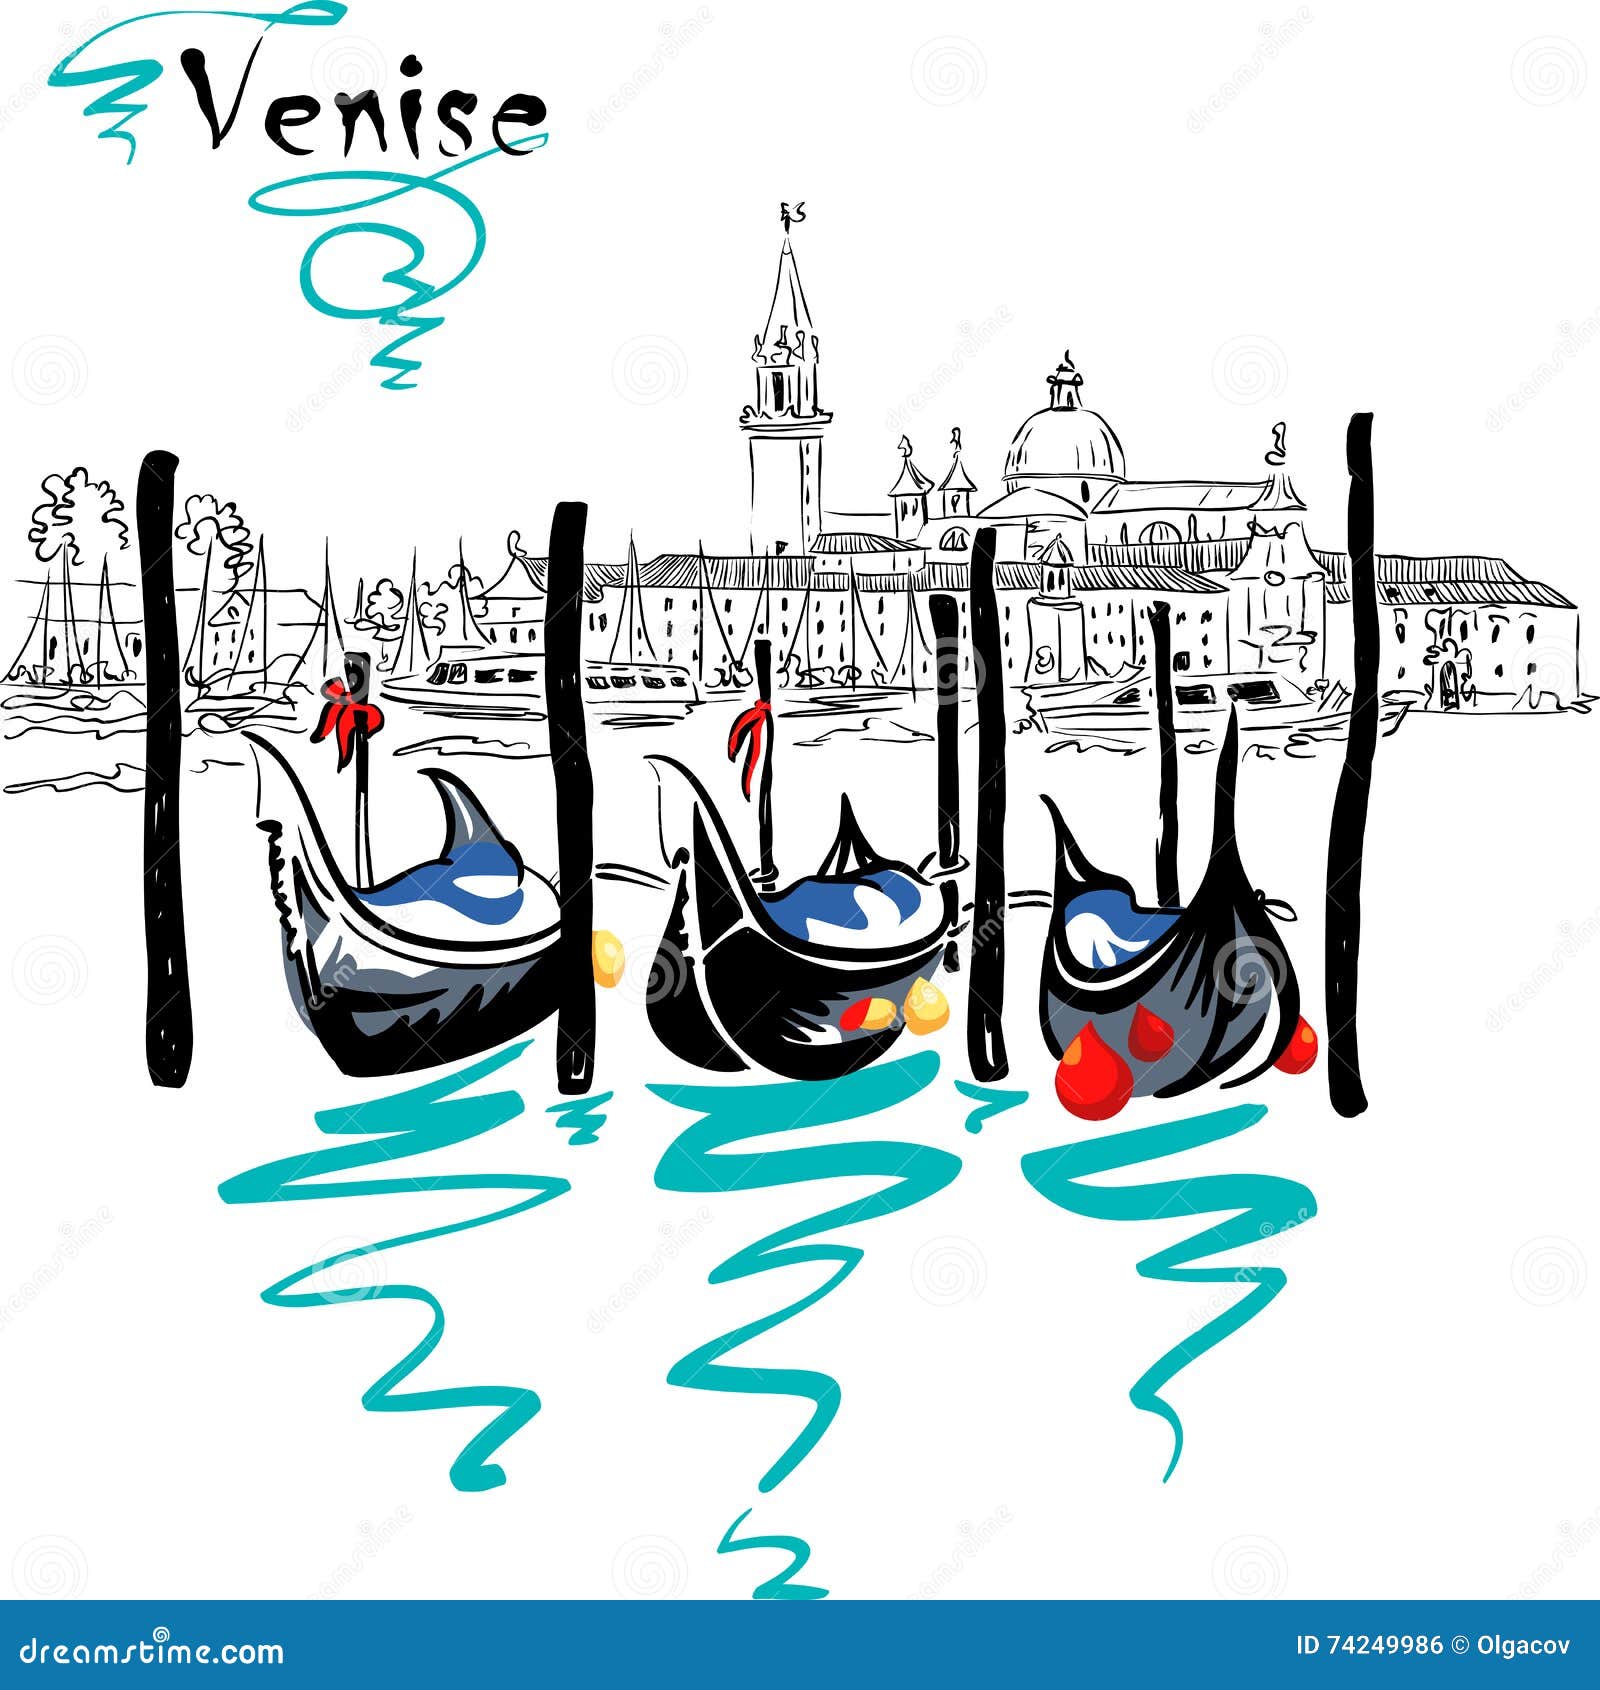  gondolas in venice lagoon, italia